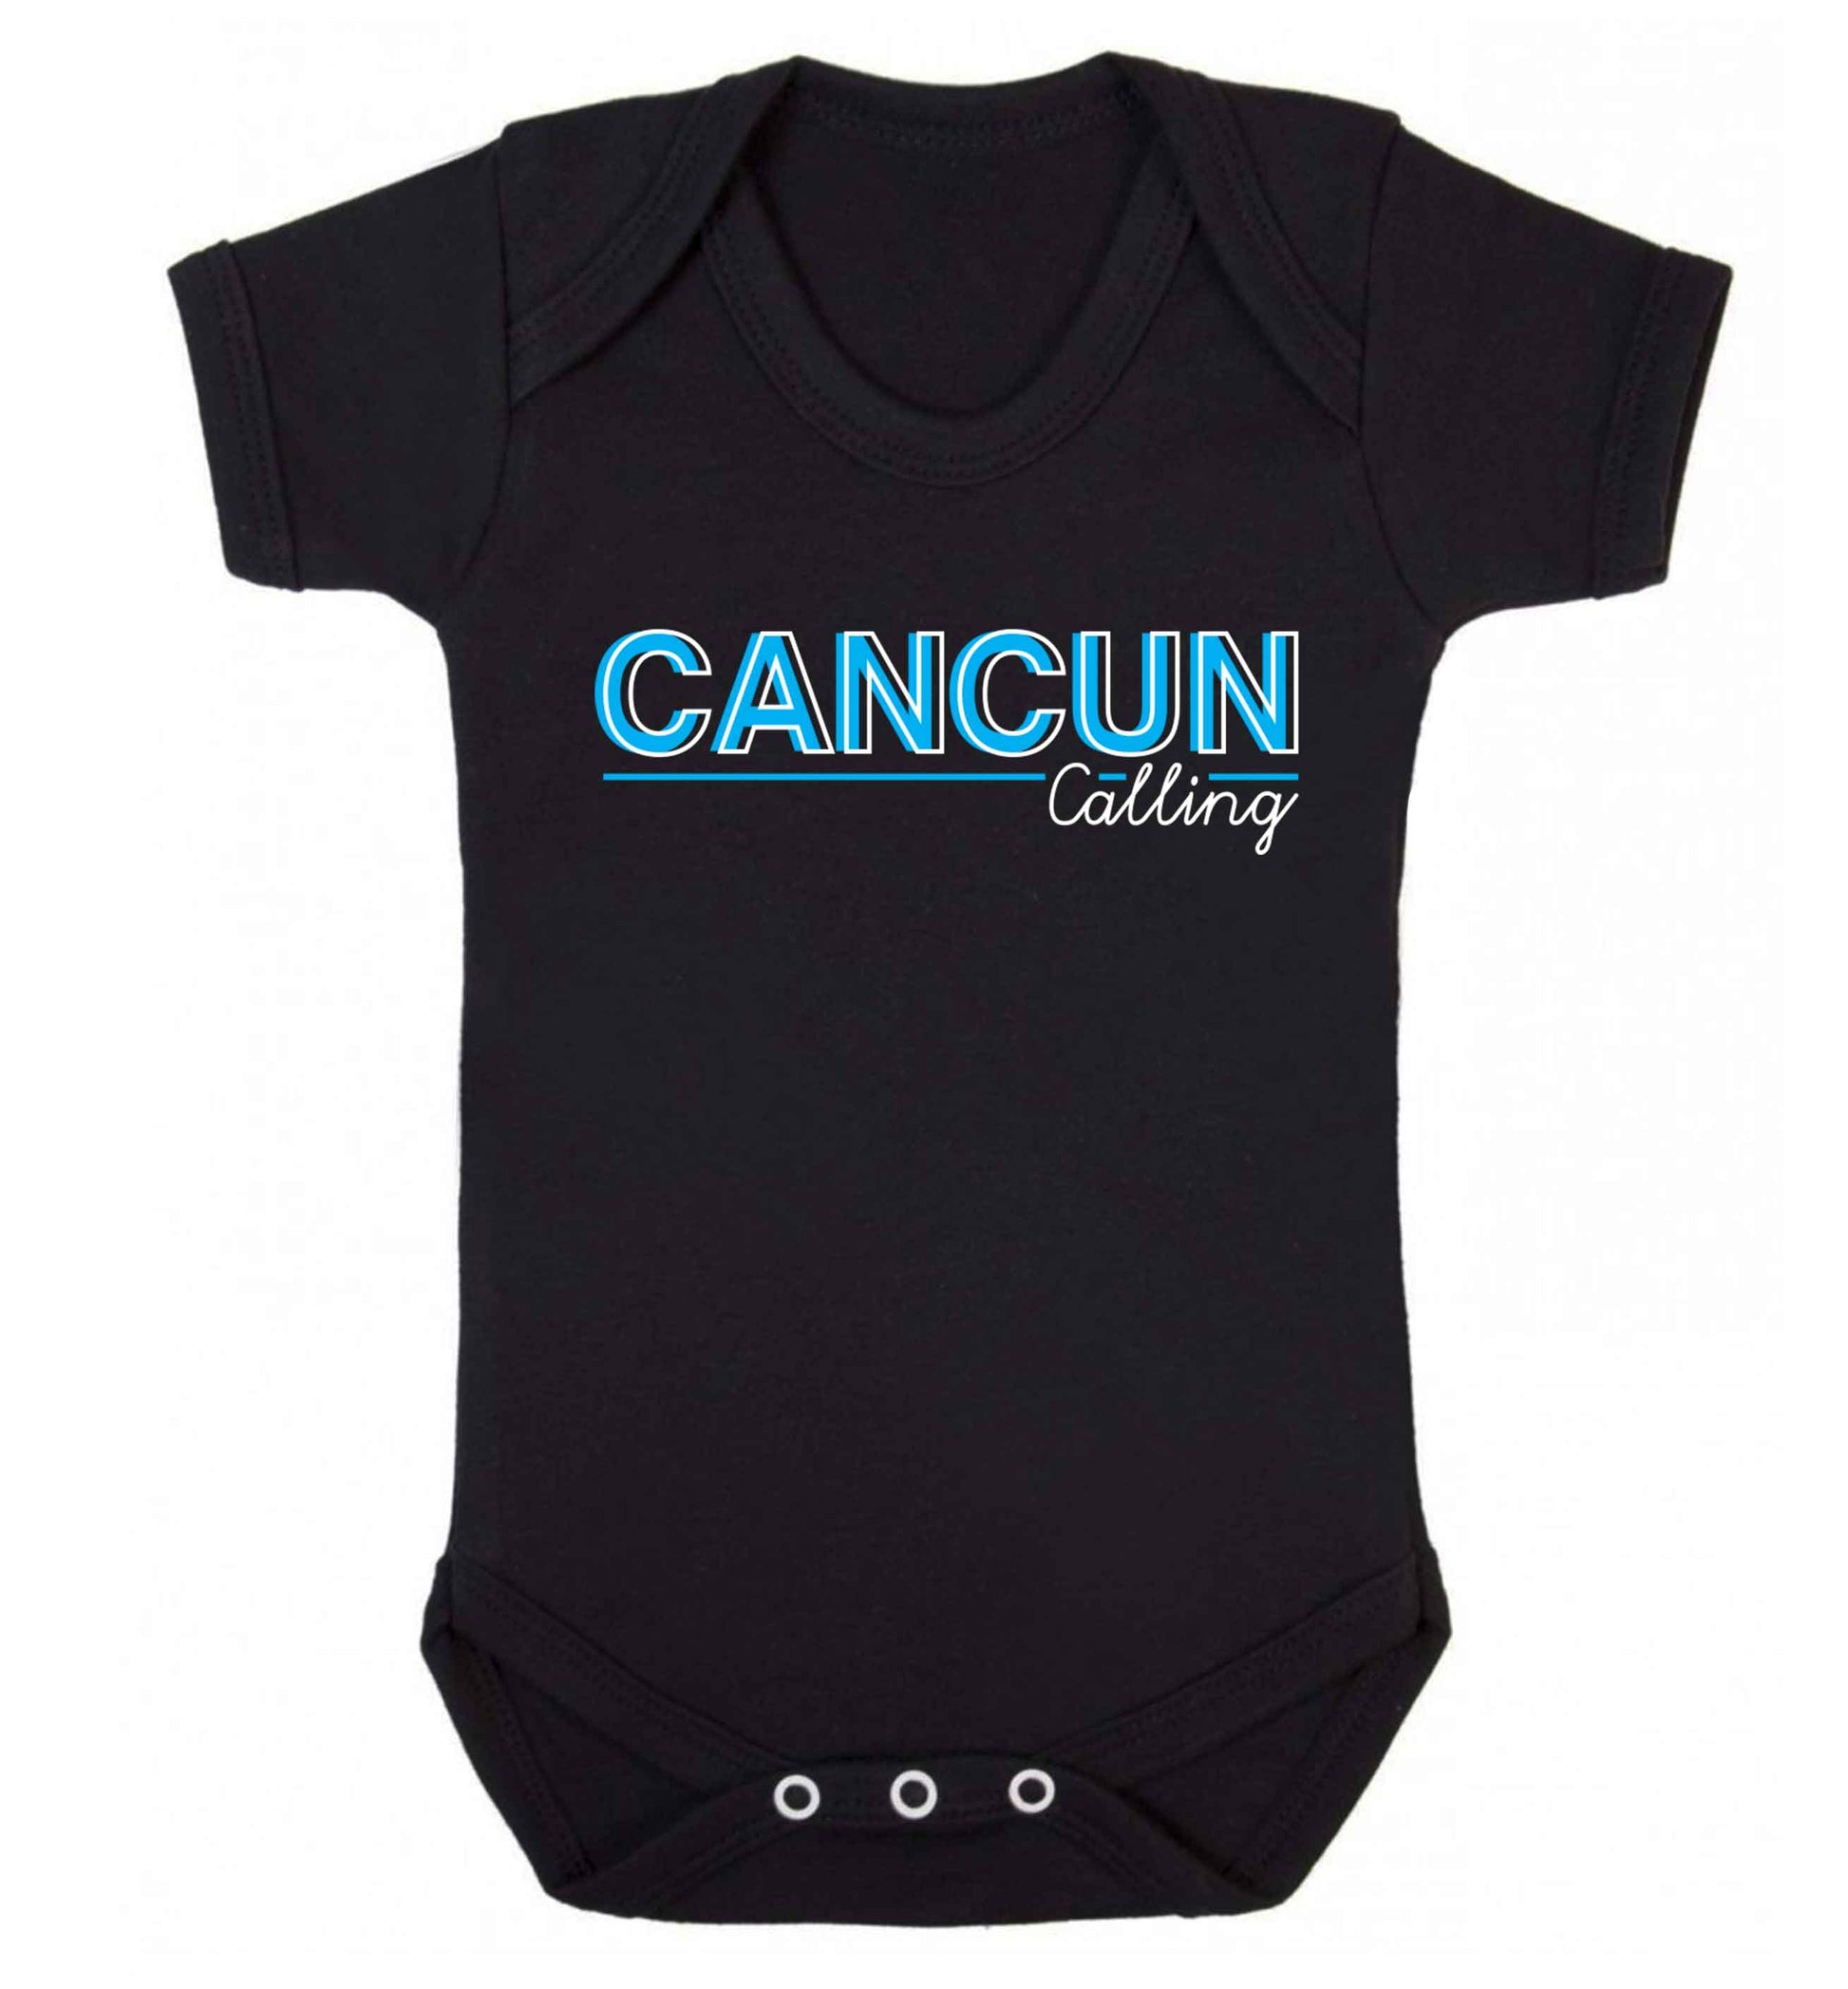 Cancun calling Baby Vest black 18-24 months